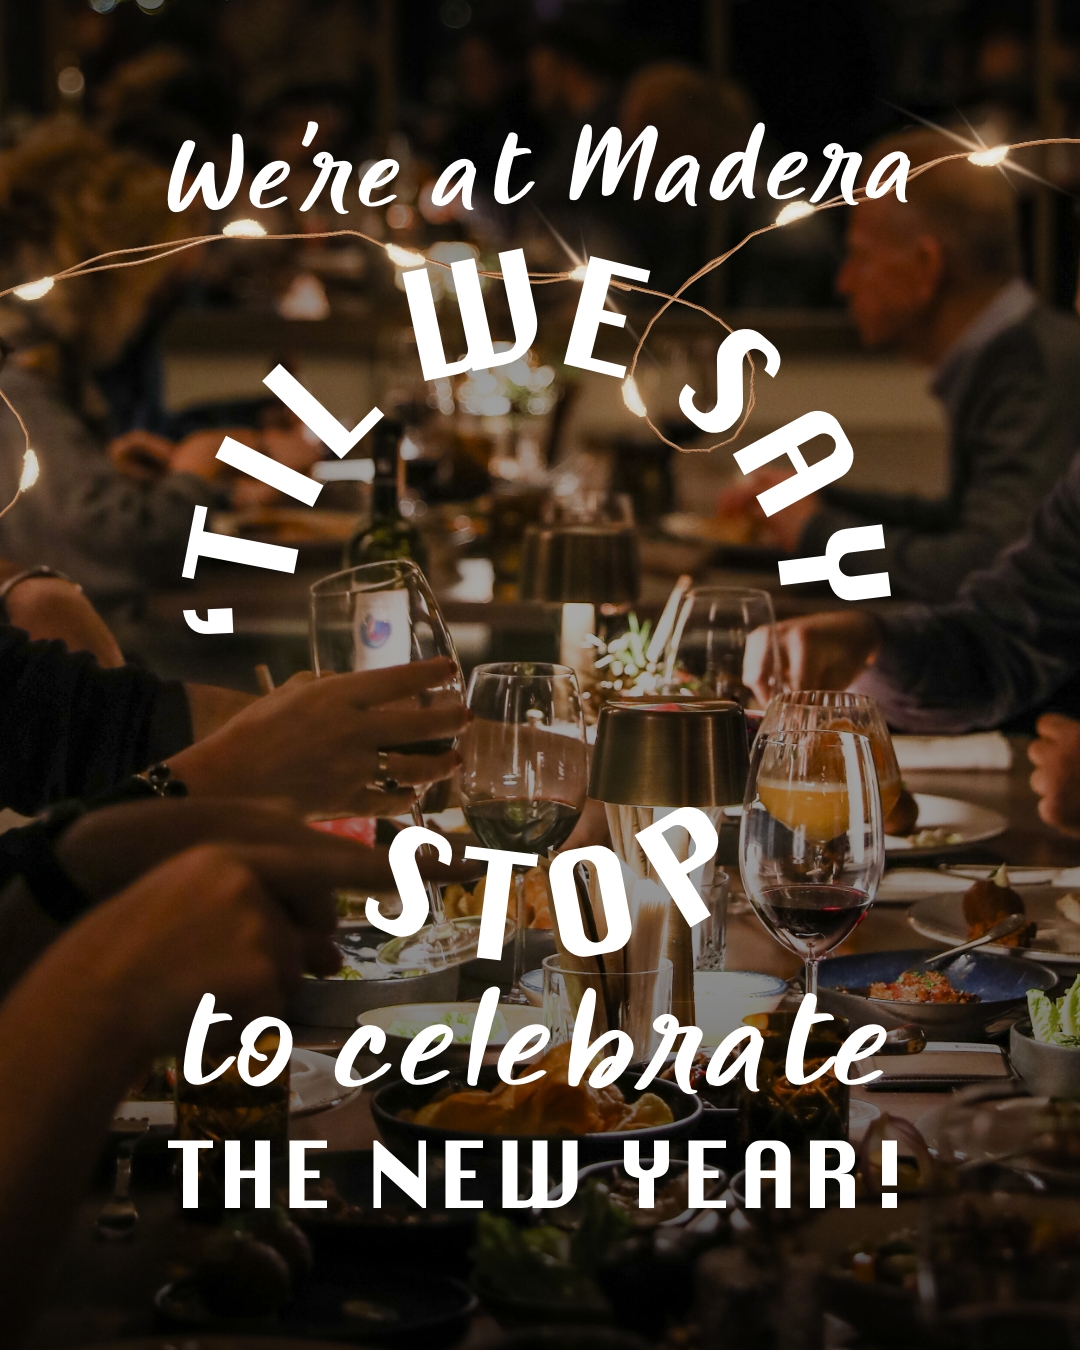 Madera'da Yılbaşı - New Year's at Madera